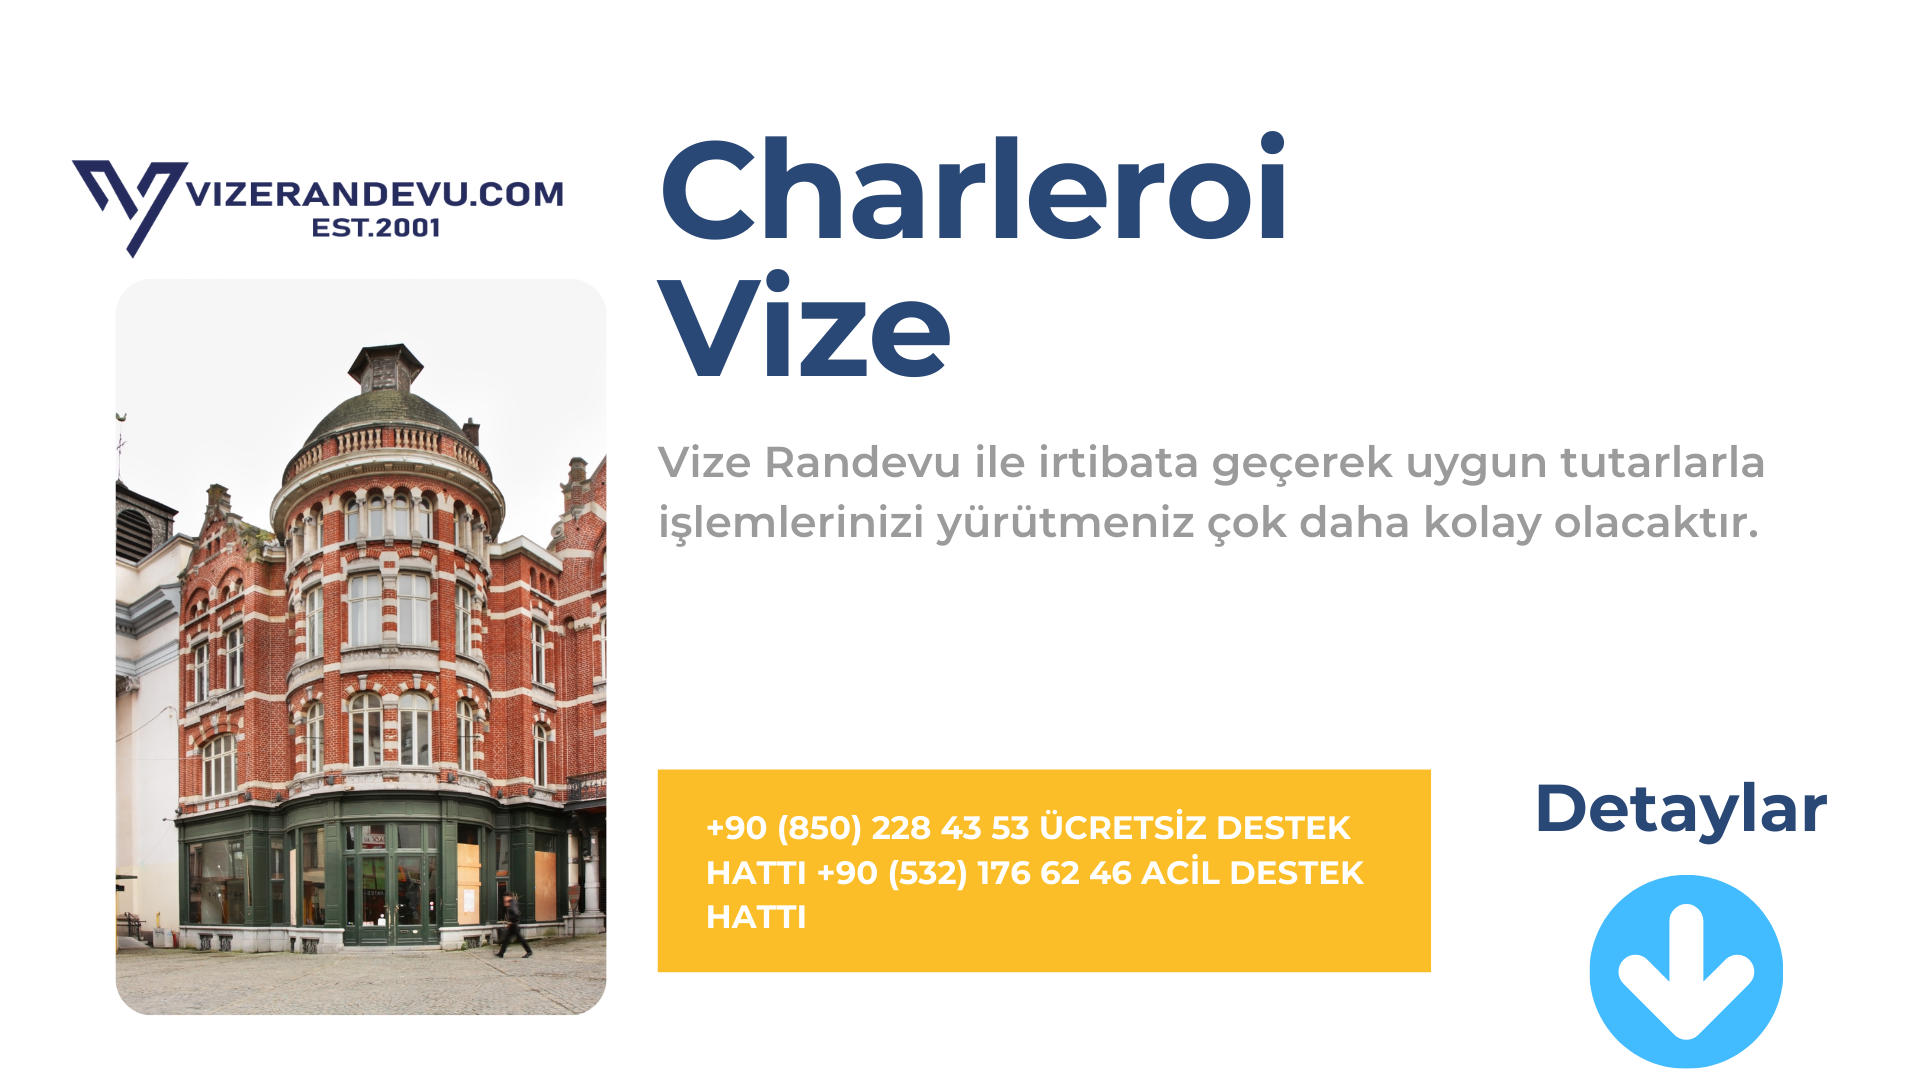 Charleroi Vize